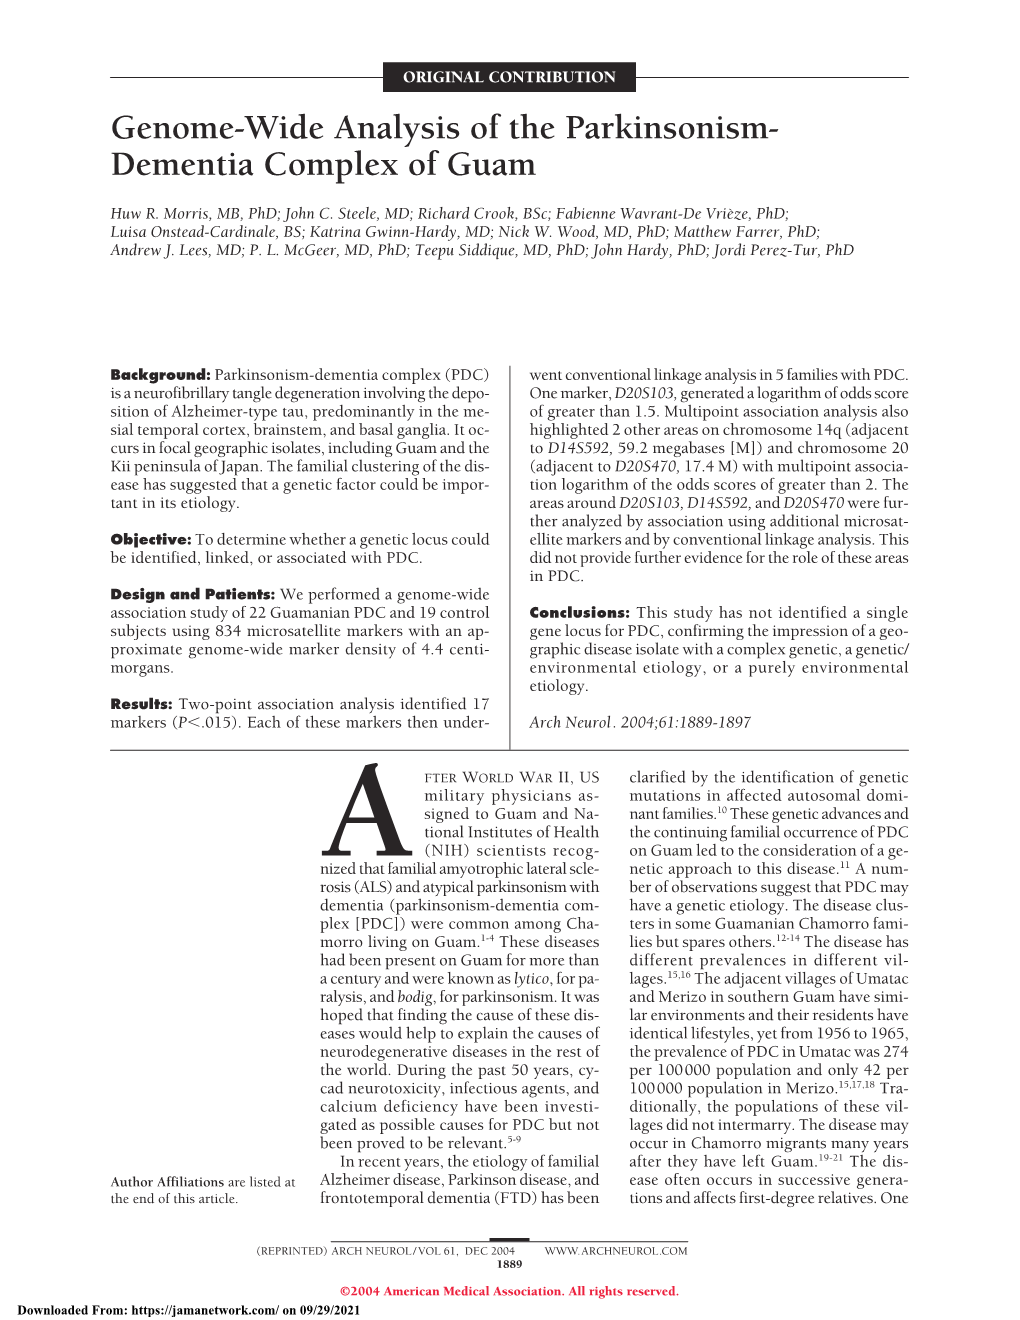 Genome-Wide Analysis of the Parkinsonism-Dementia Complex